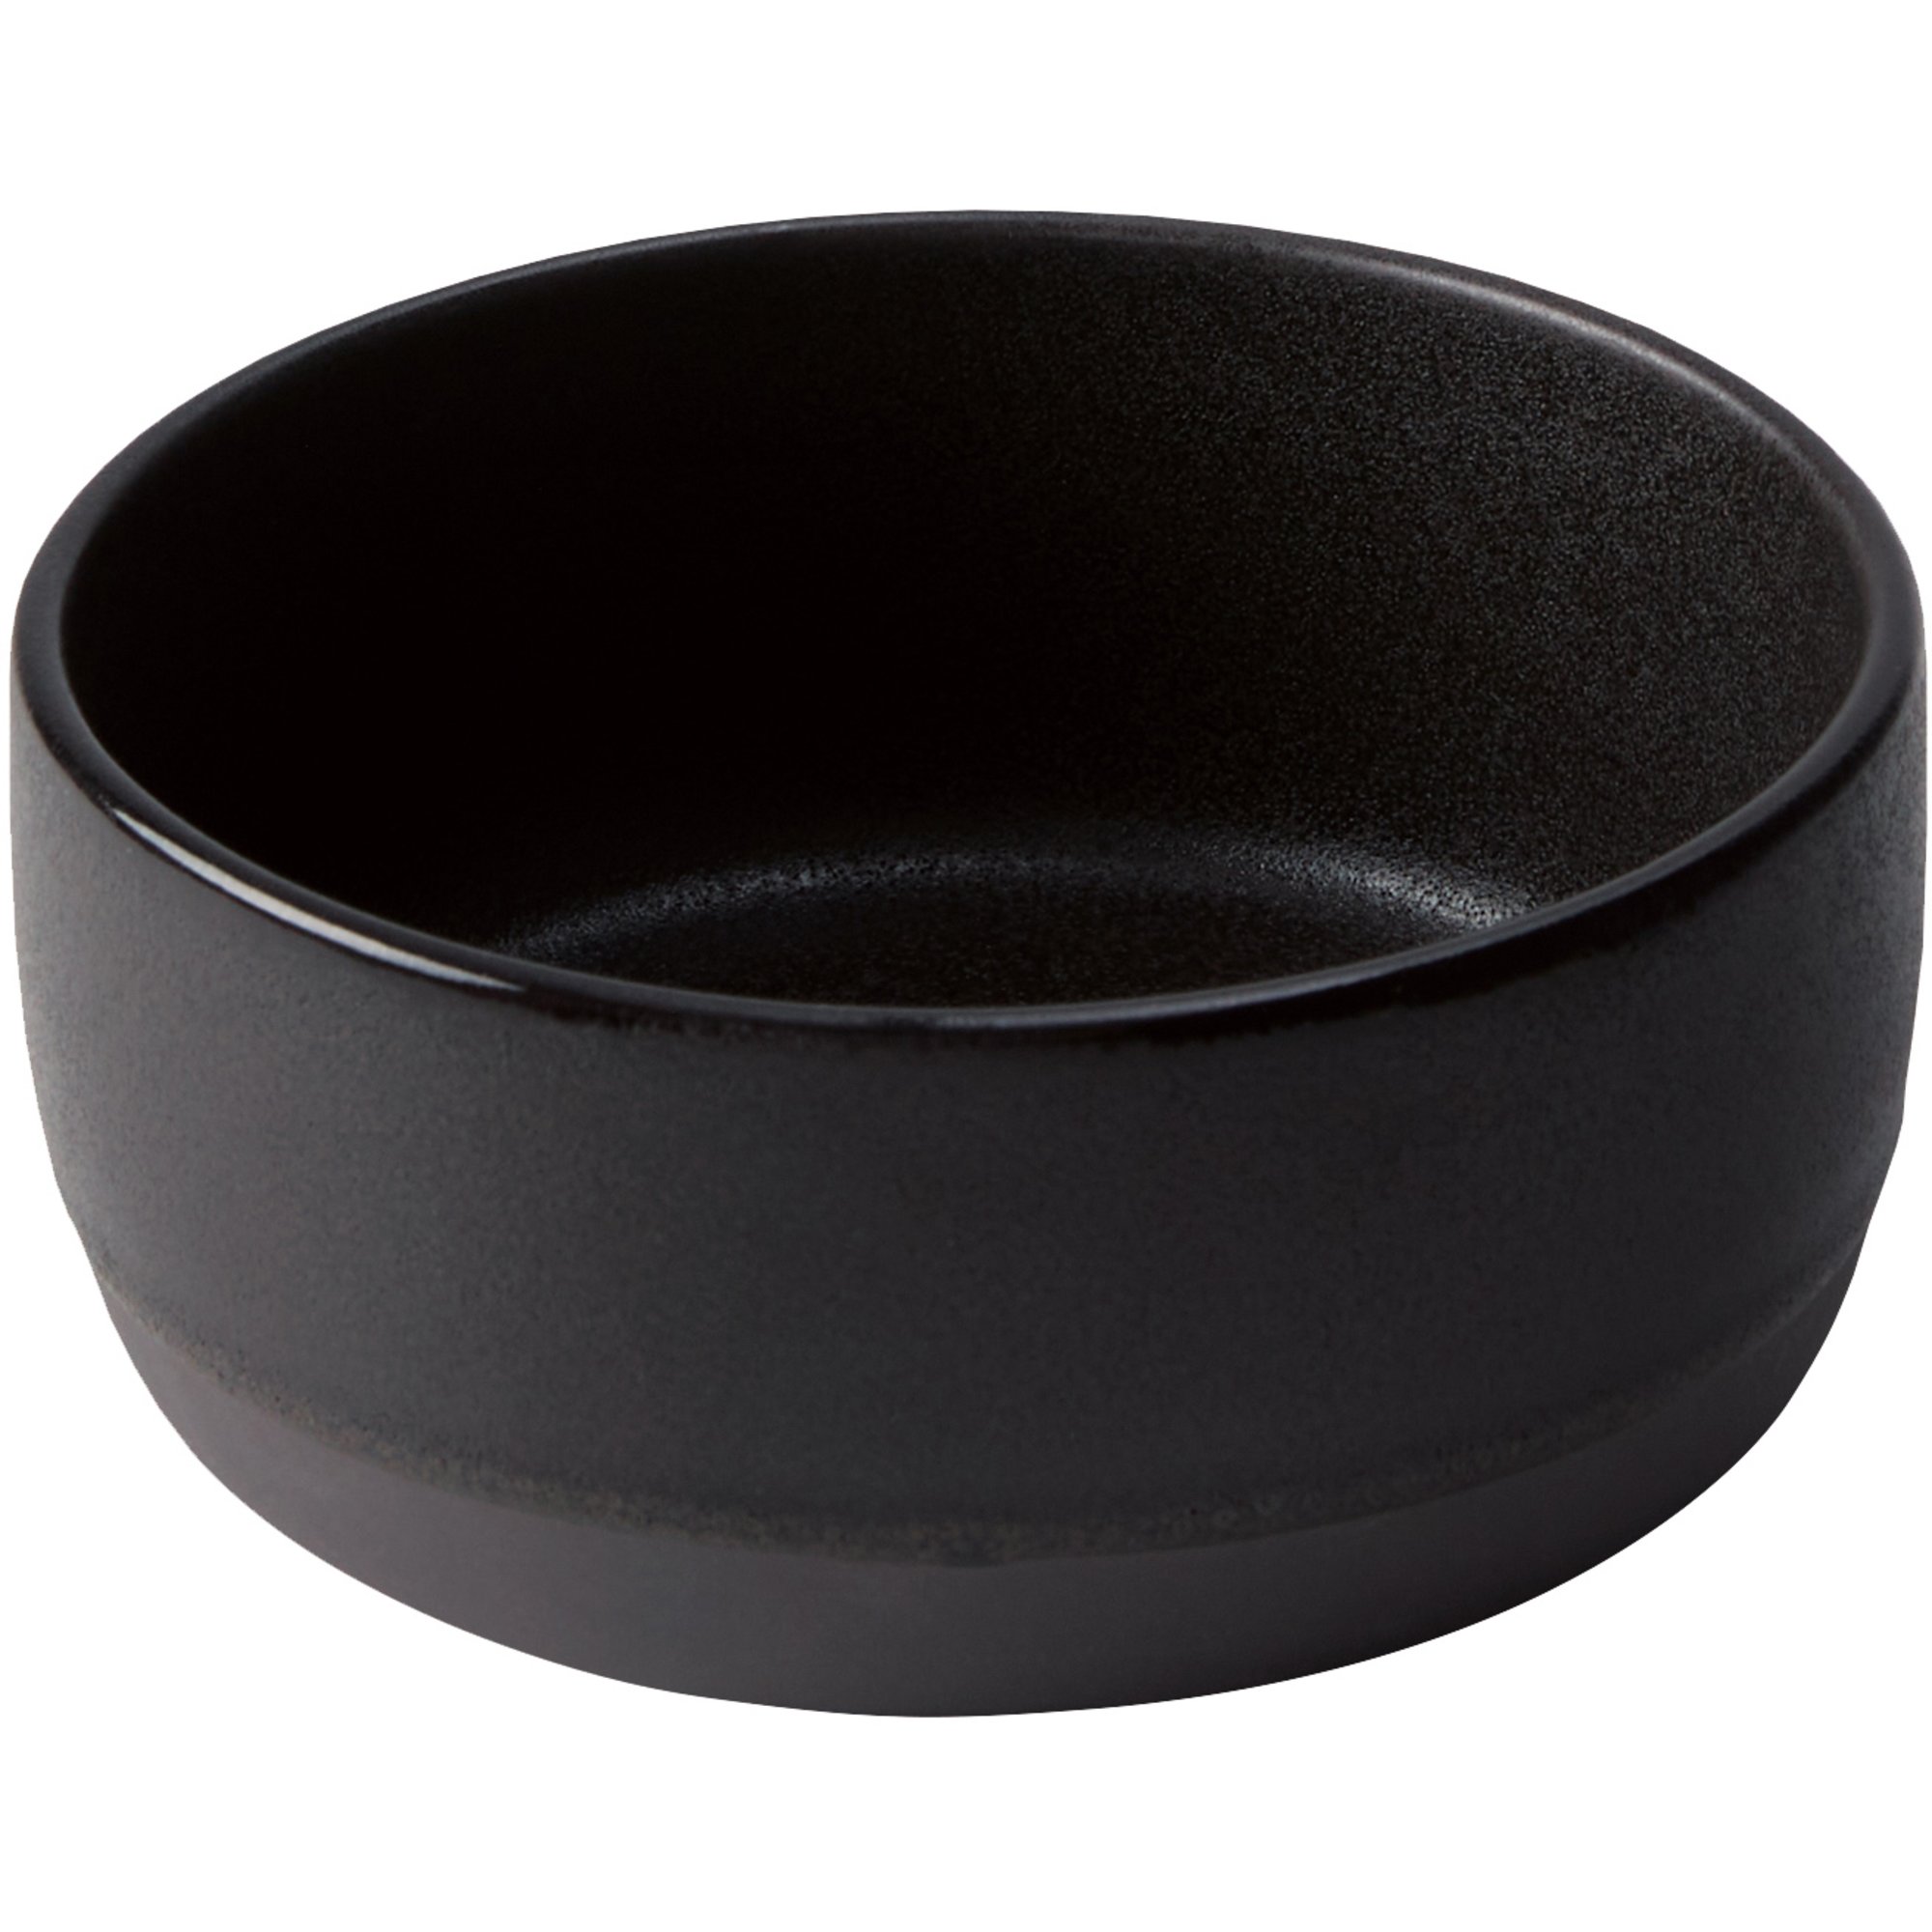 Aida RAW skål, 19,5 cm, titanium black